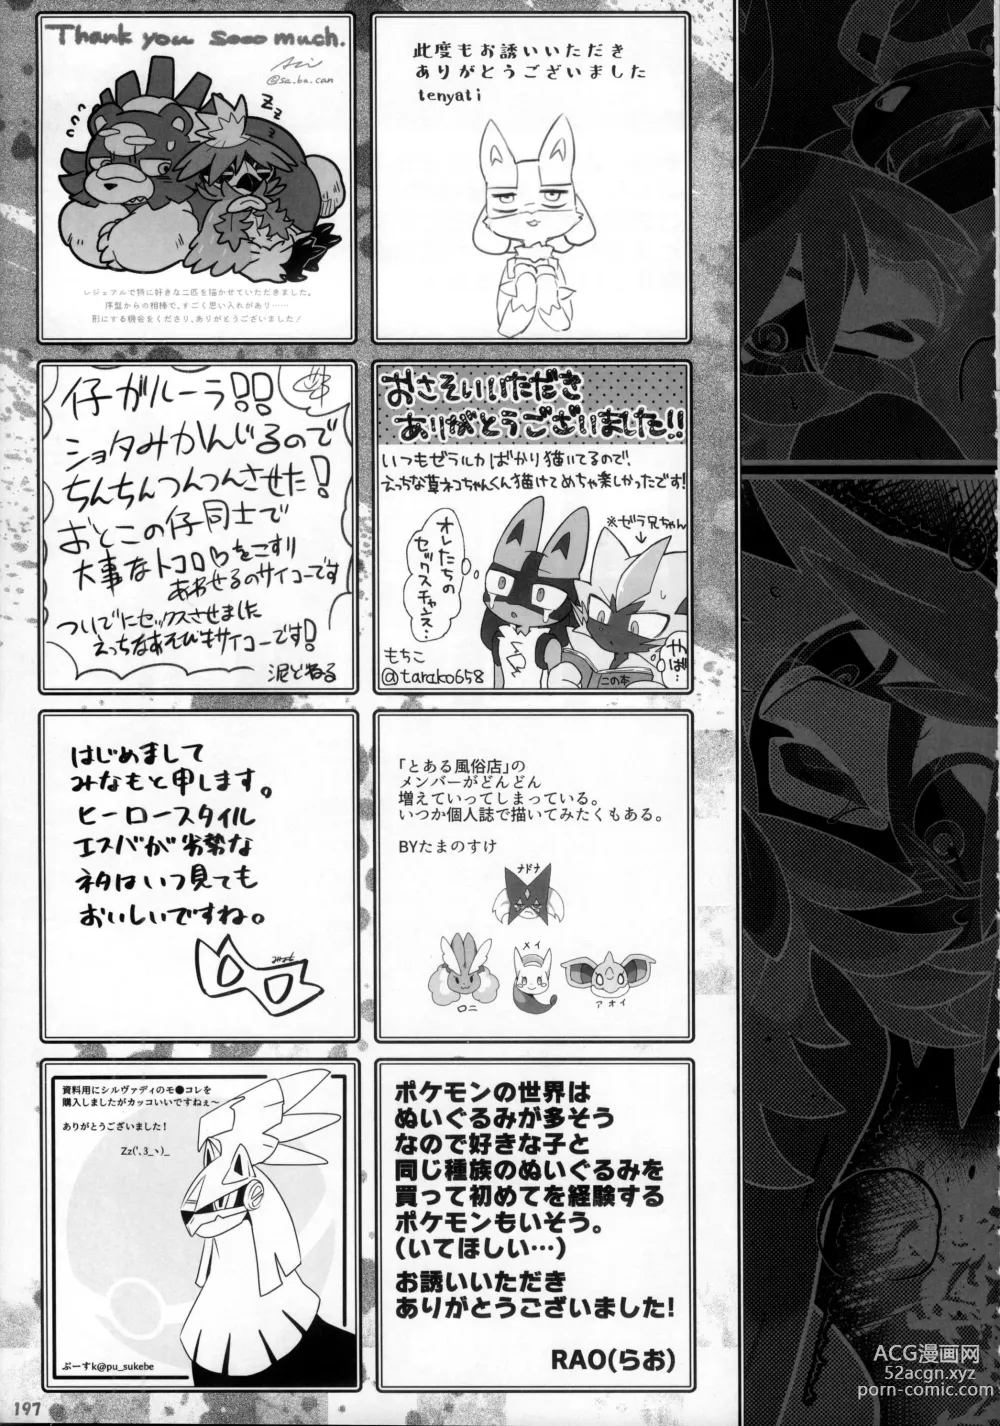 Page 196 of doujinshi Kairaku Ochi ♂ 4